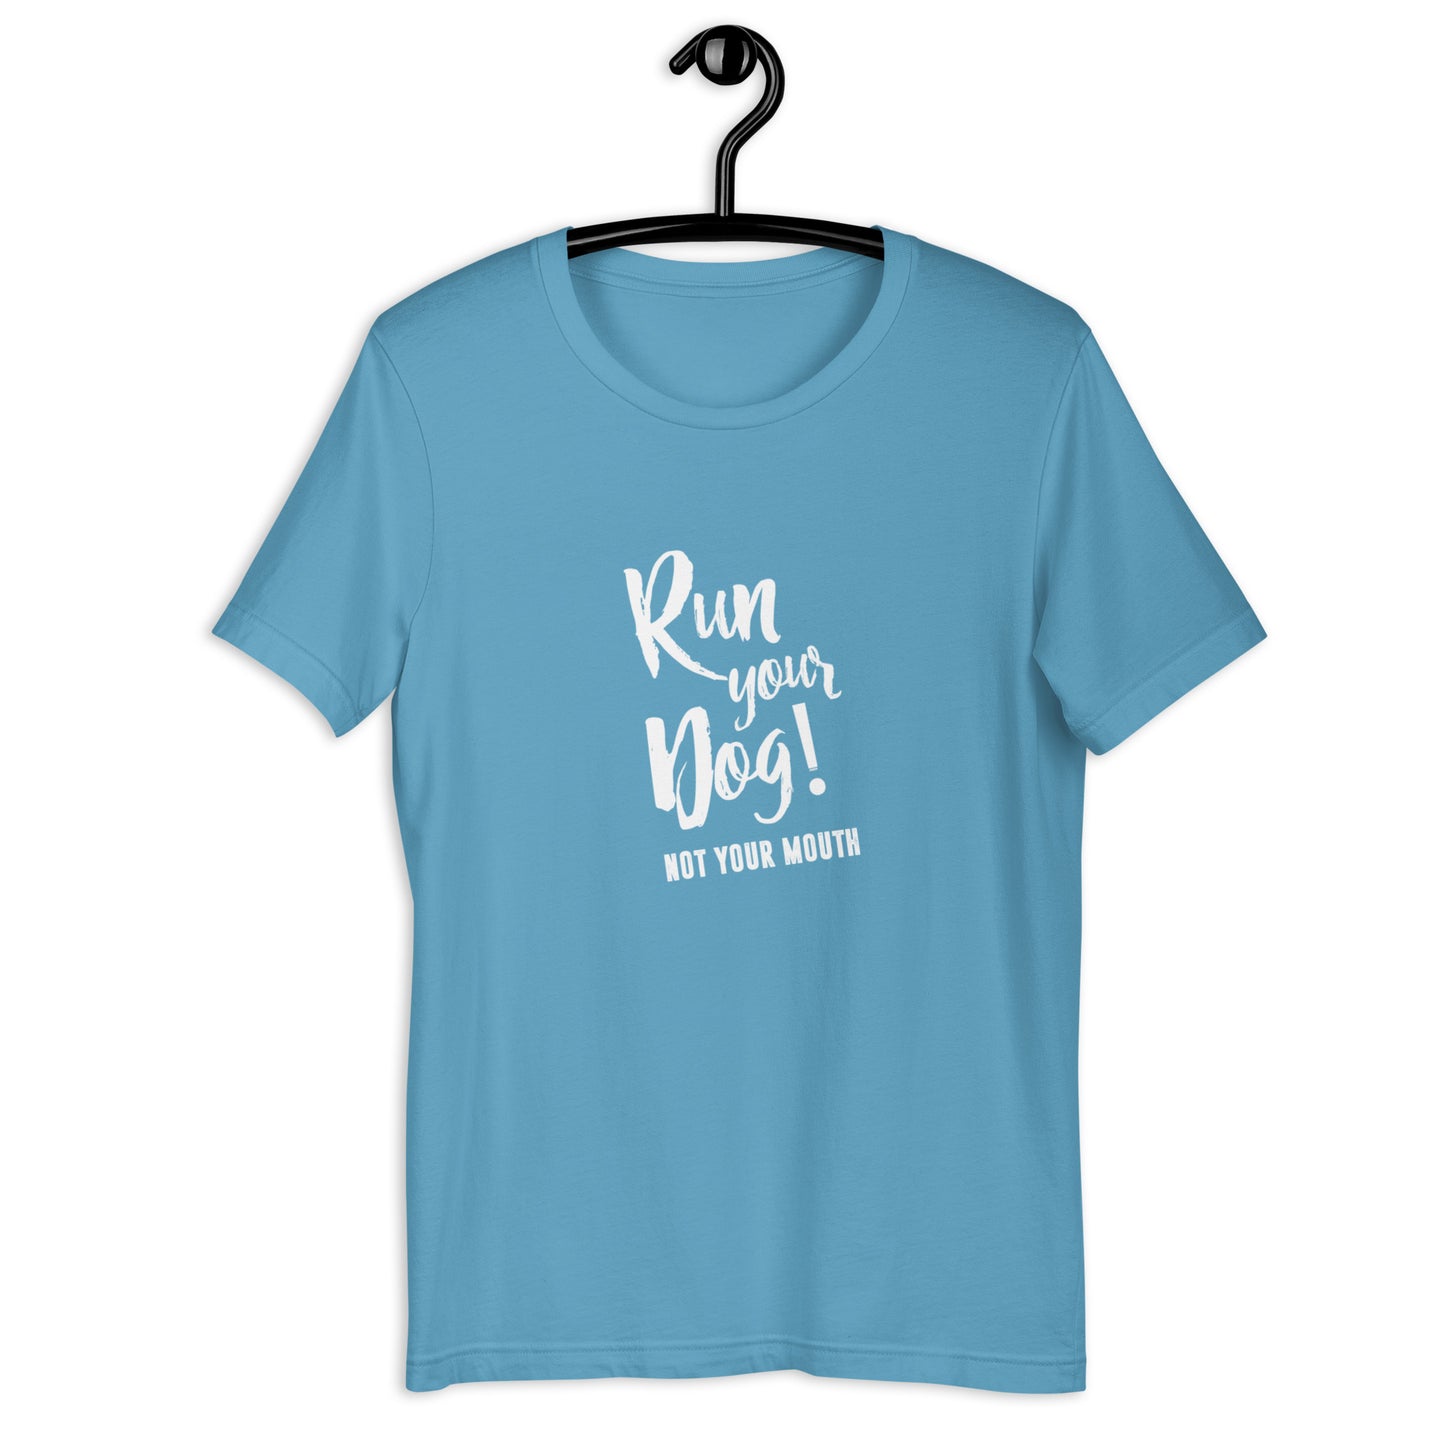 RUN YOUR DOG - SCRIPT - Unisex t-shirt